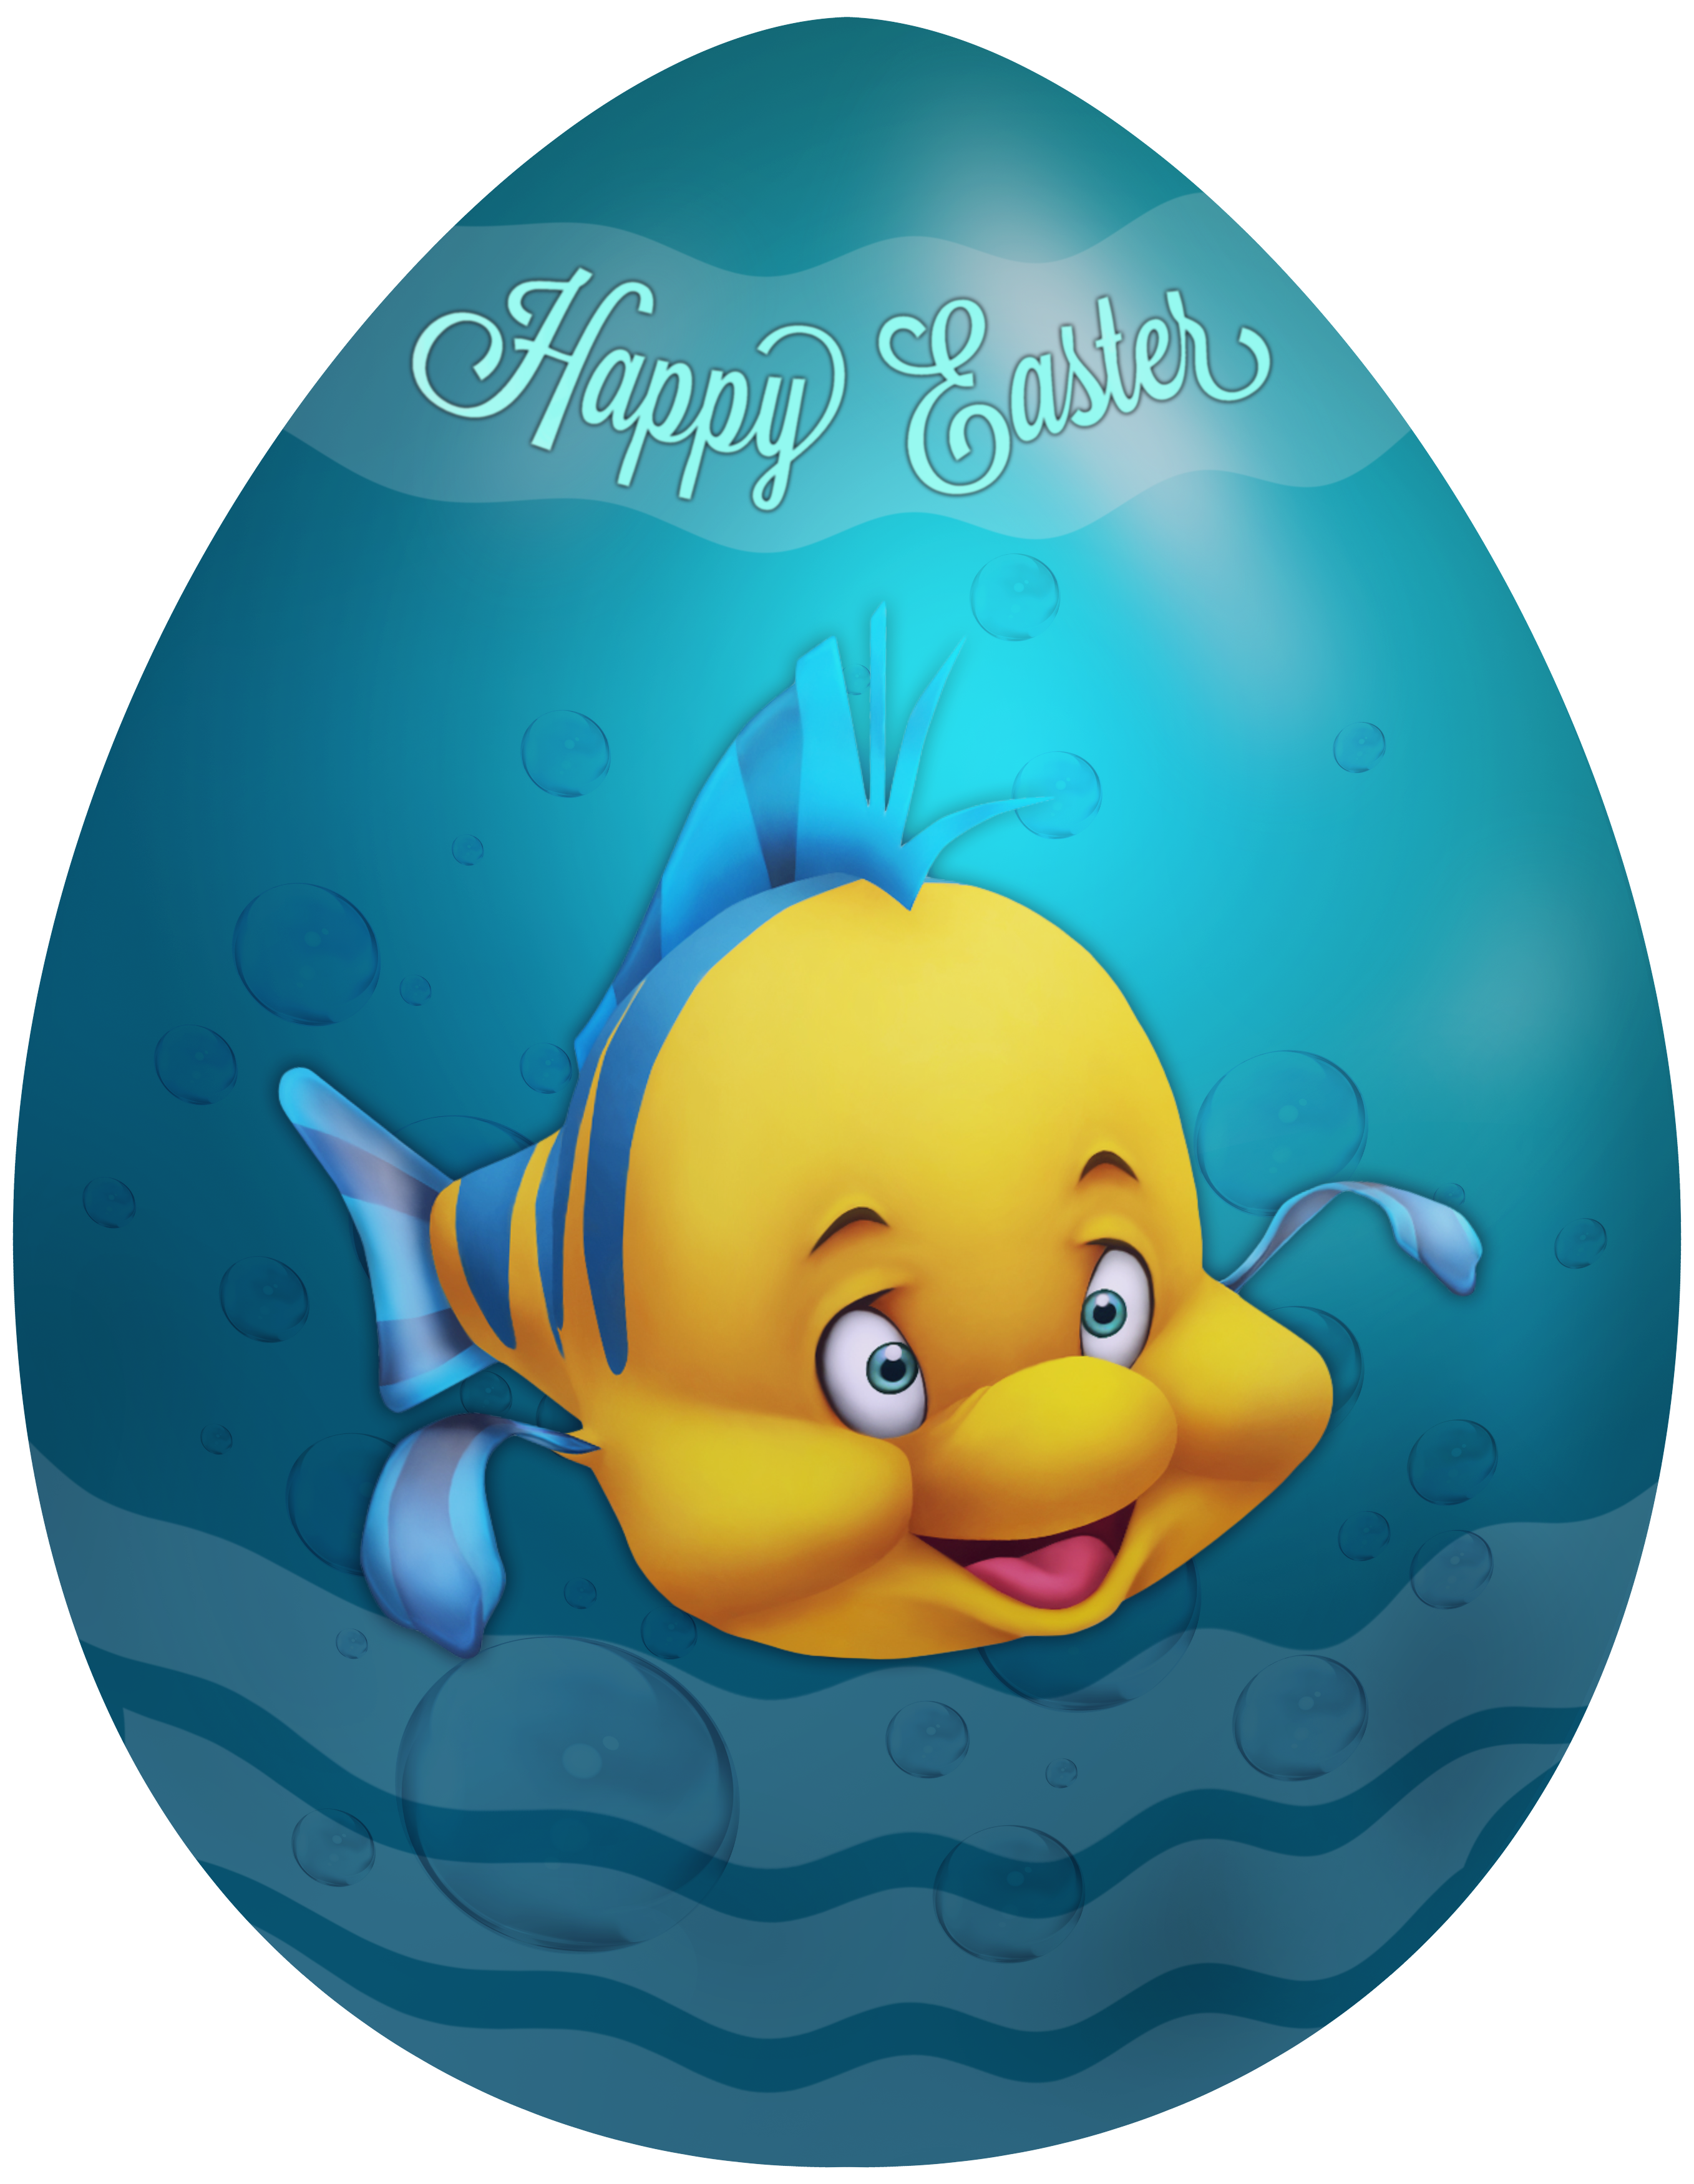 https://gallery.yopriceville.com/var/albums/Free-Clipart-Pictures/Easter-Pictures-PNG/Kids_Easter_Egg_Flounder_PNG_Clip_Art_Image.png?m=1629796178